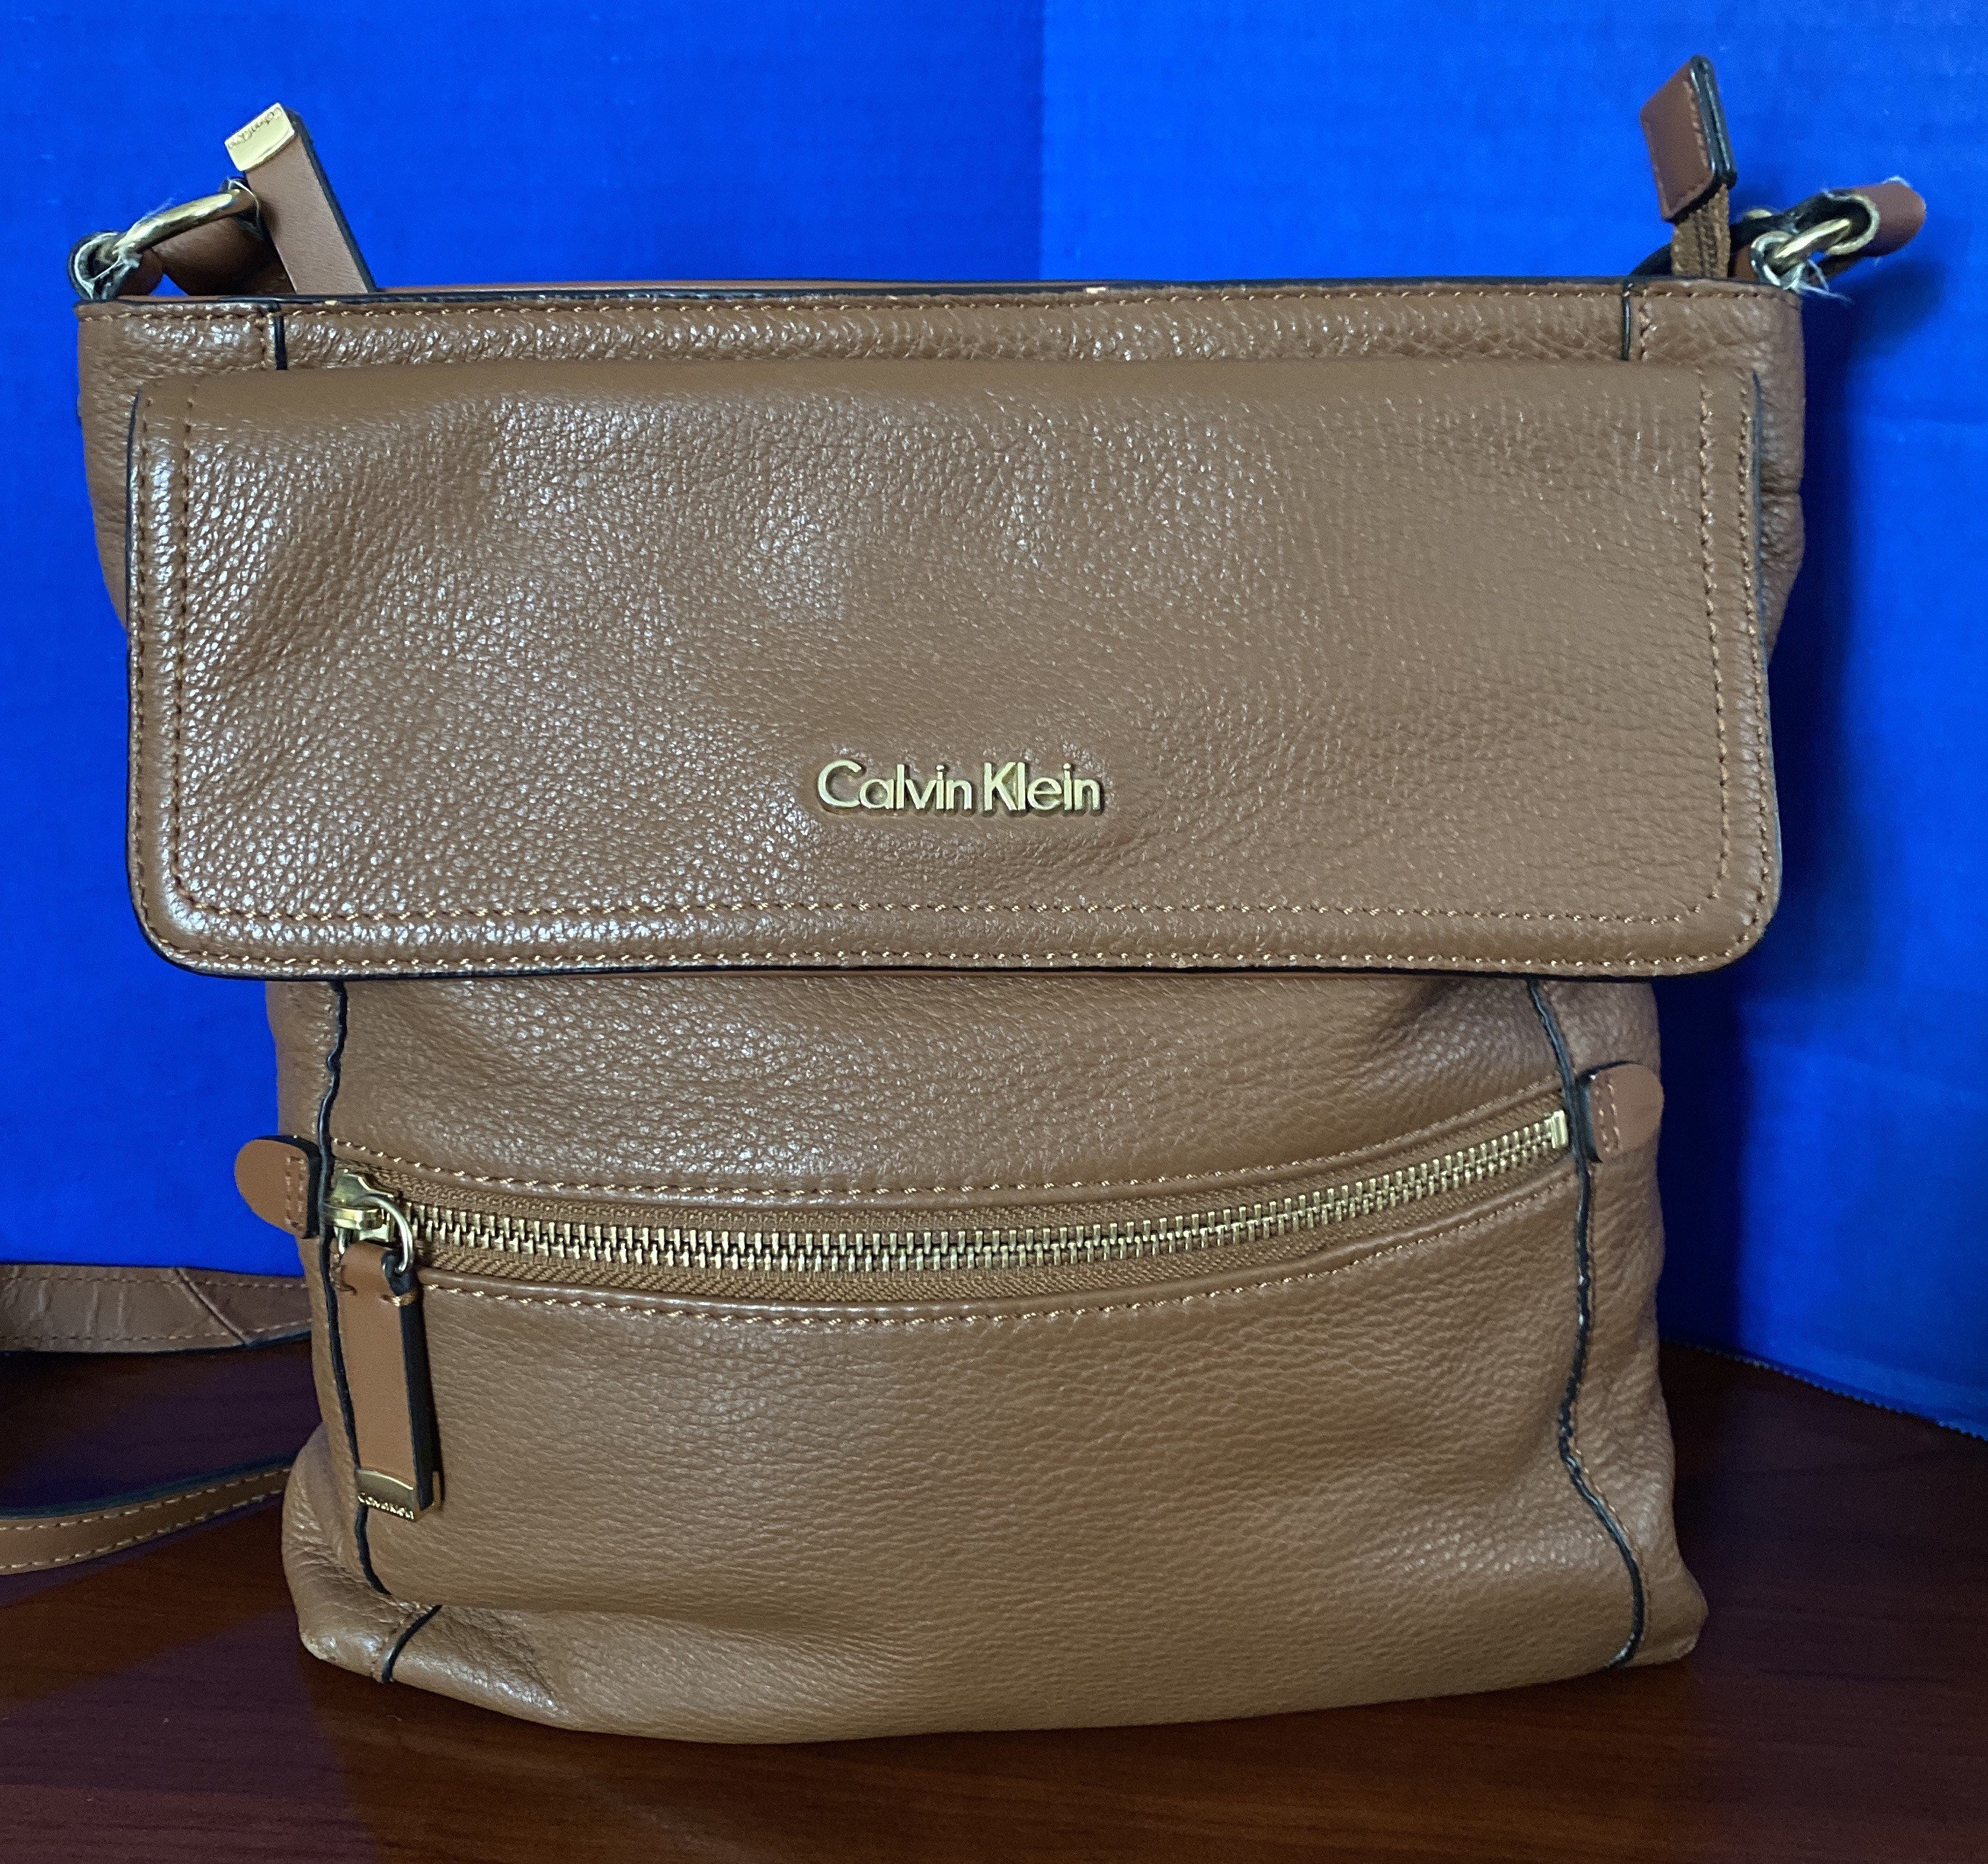 Calvin Klein Bags - Buy Calvin Klein Bags Online in India